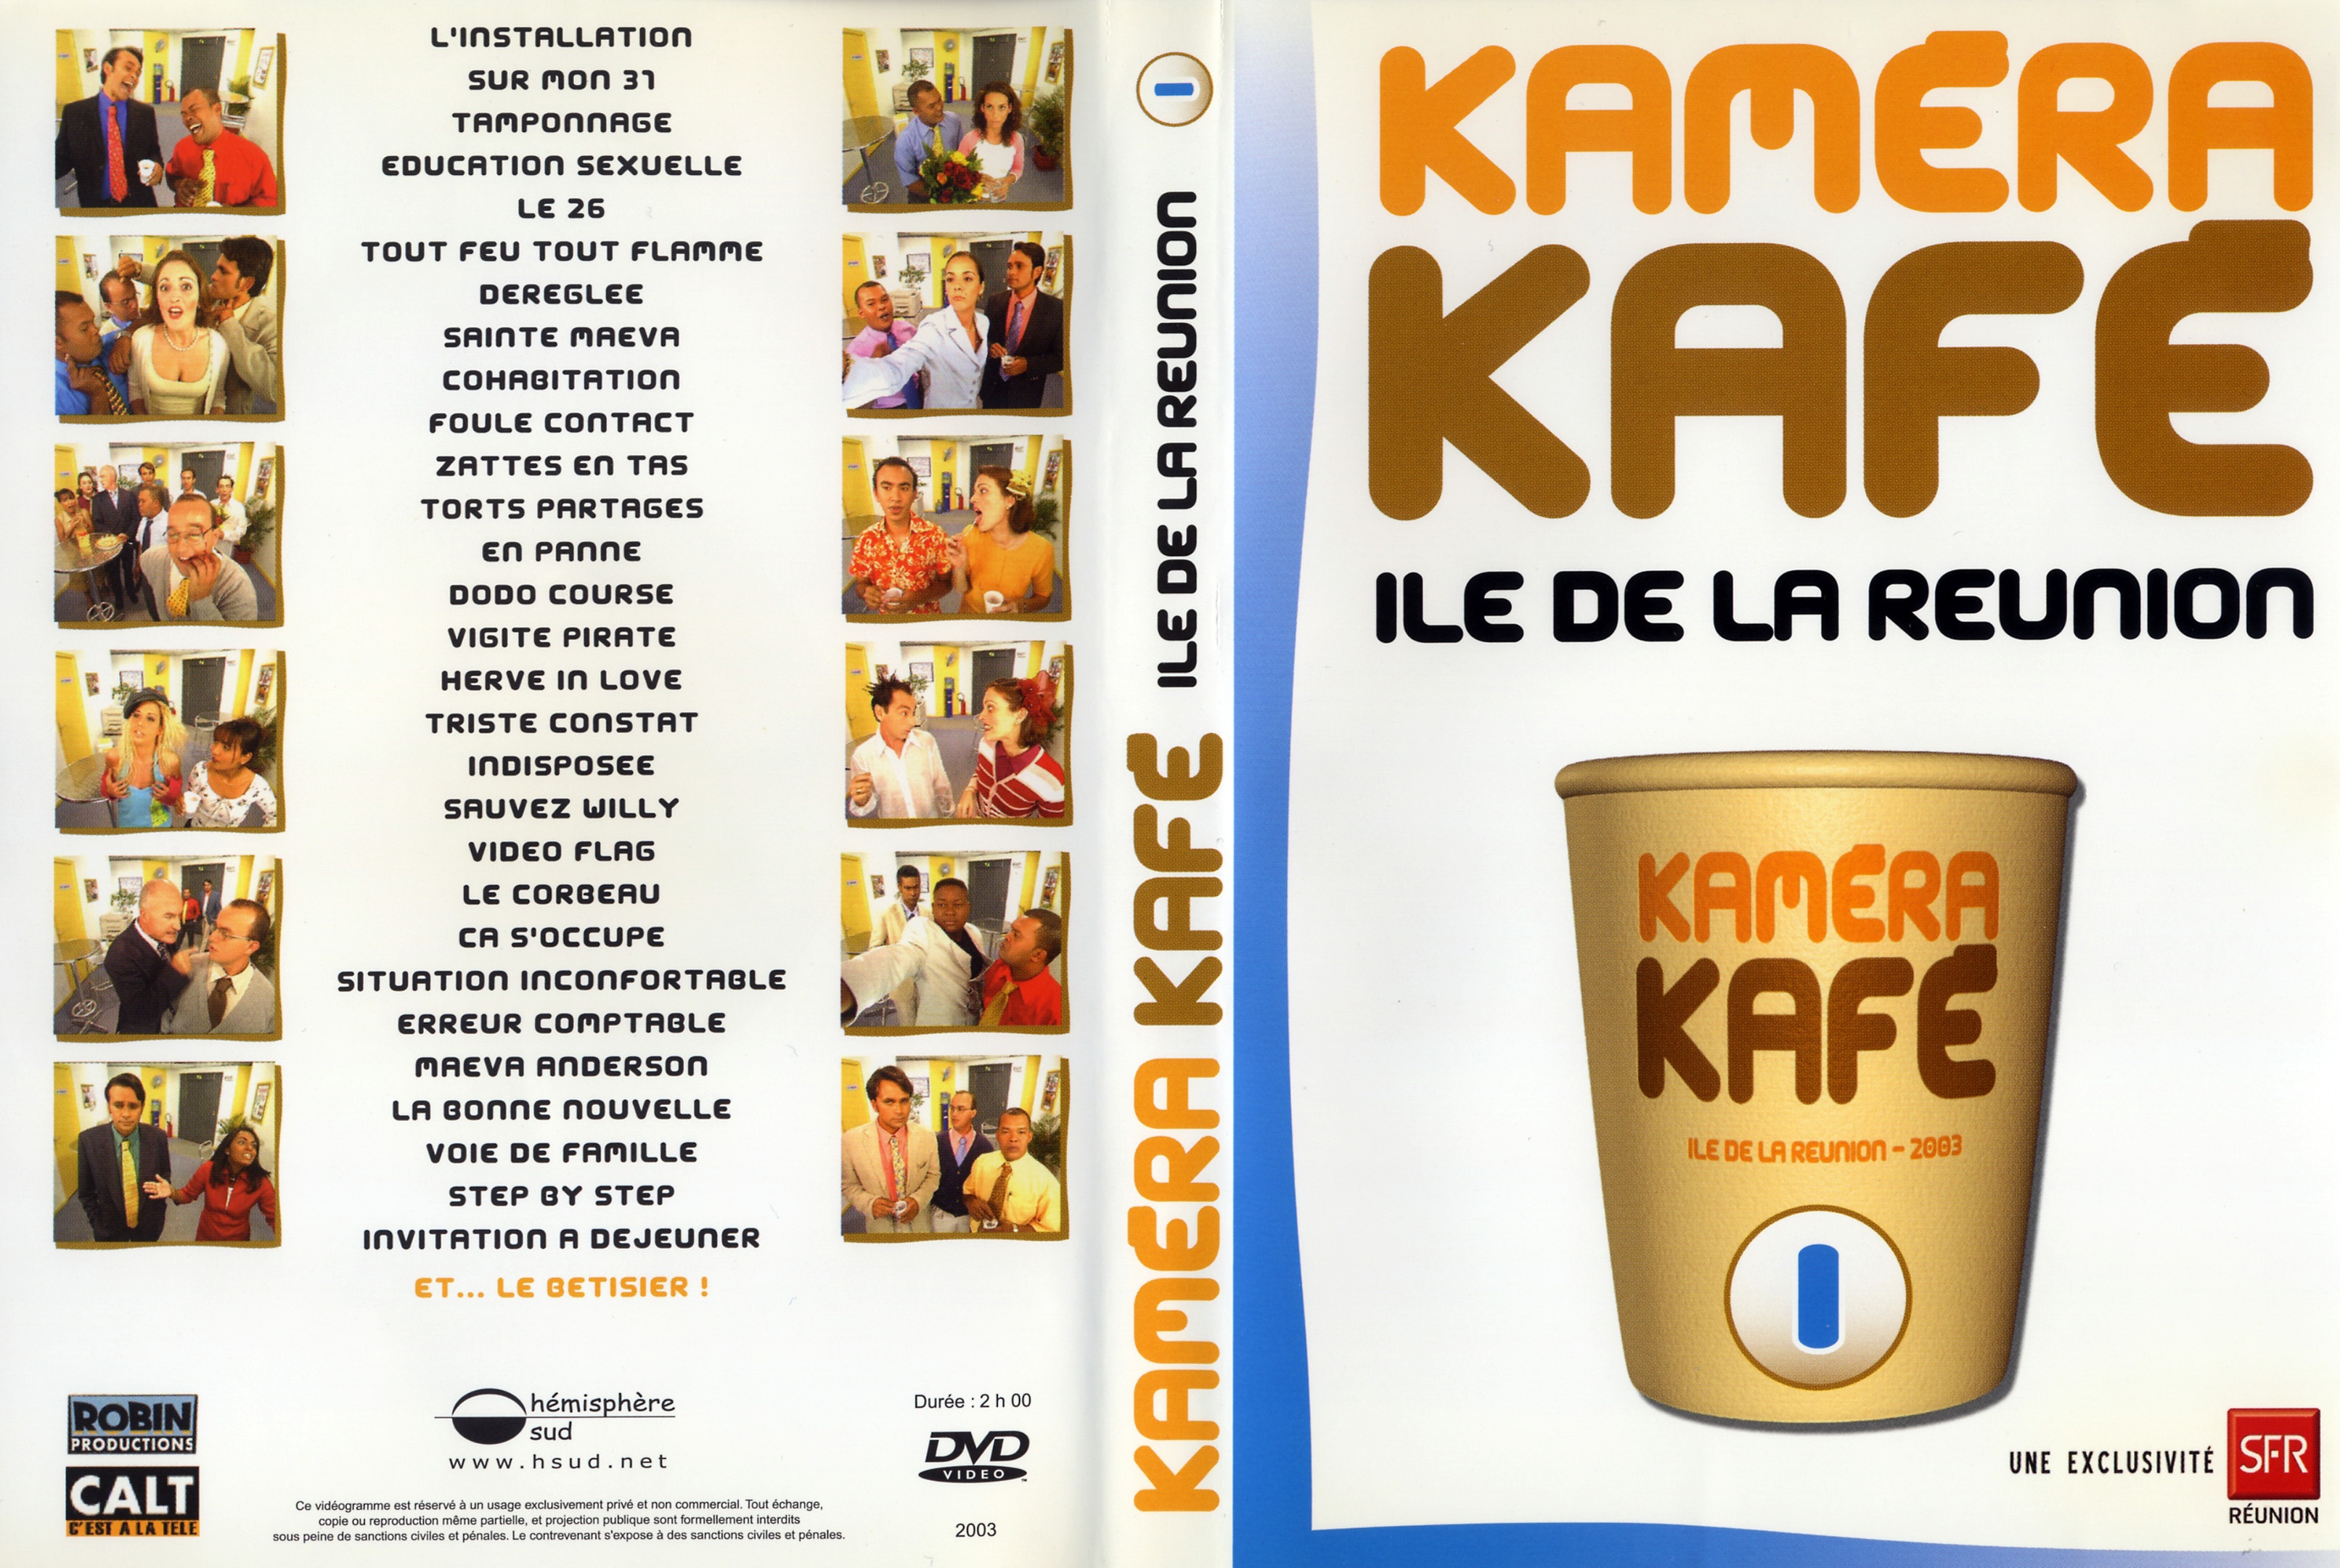 Jaquette DVD Kamra kaf Ile de la Runion vol 1